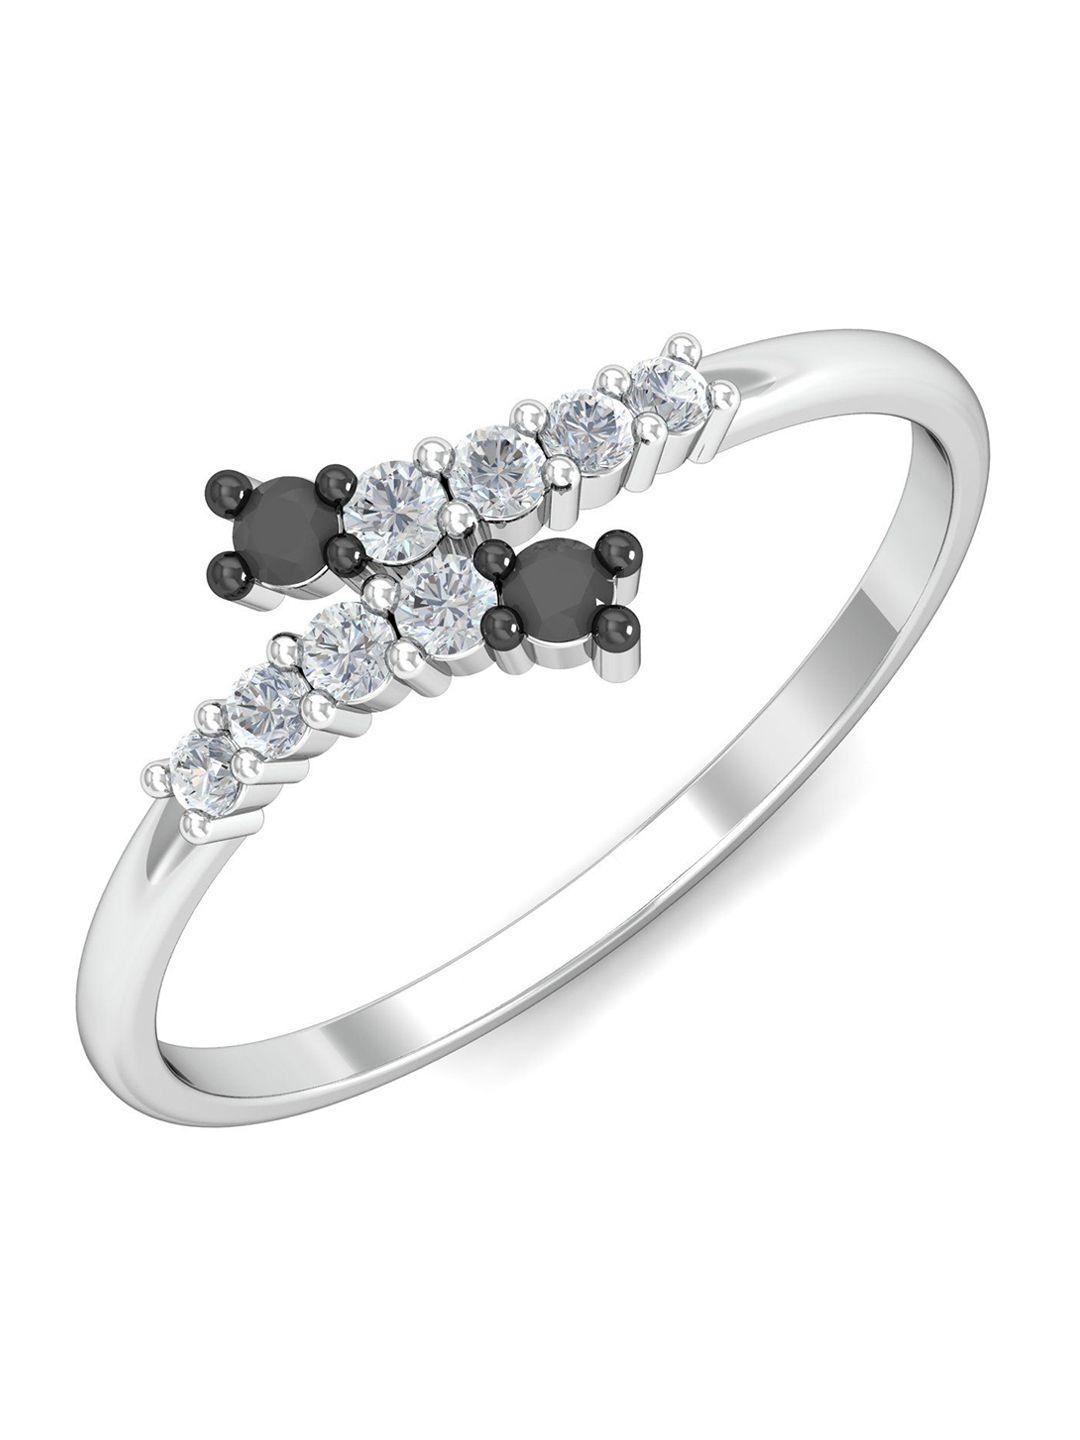 kuberbox dillon spinel 18kt white gold diamond-studded & spinel ring -1.85gm